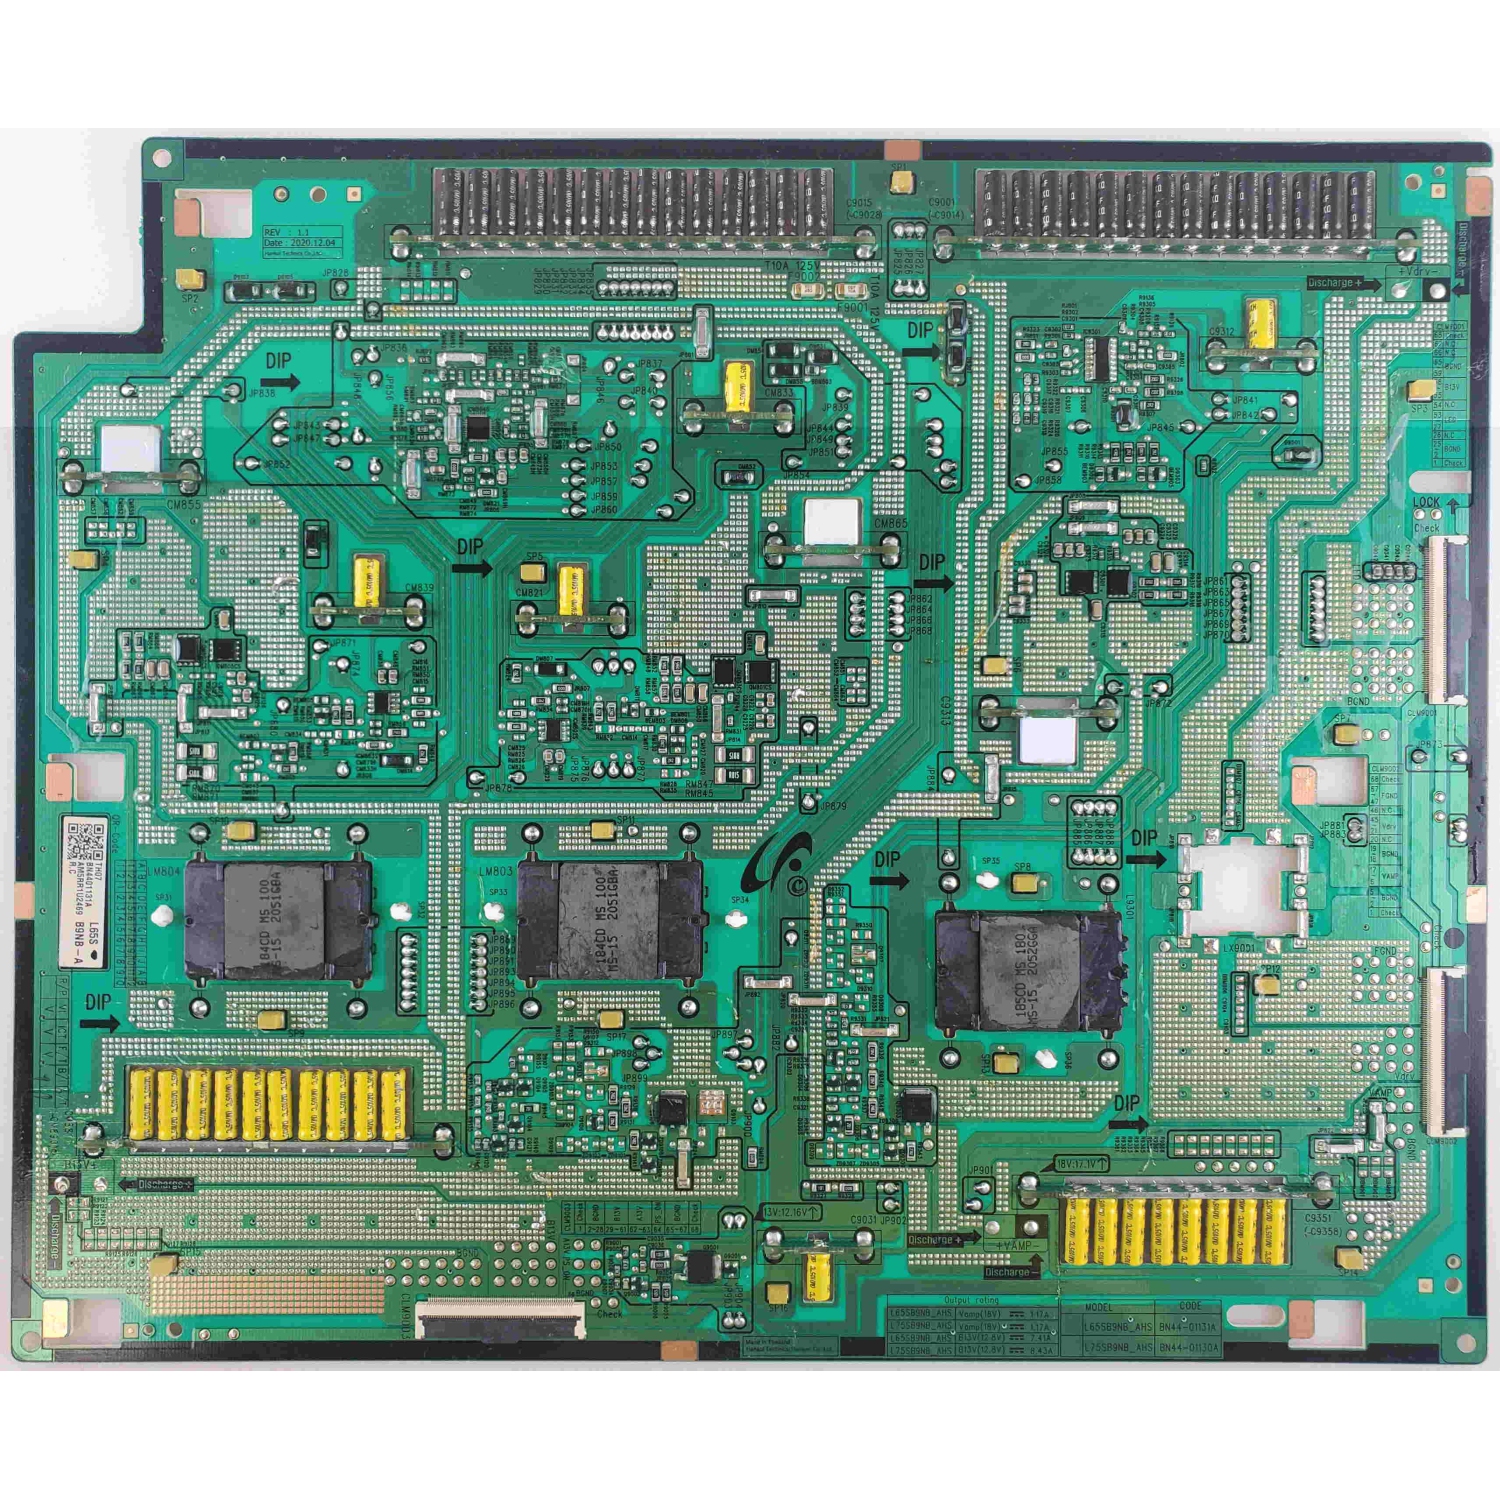 Refurbished (Good) Samsung TV Power Supply Board QN65QN800A (Ver. AB02/DB08/CA01/CC03) BN44-01131A